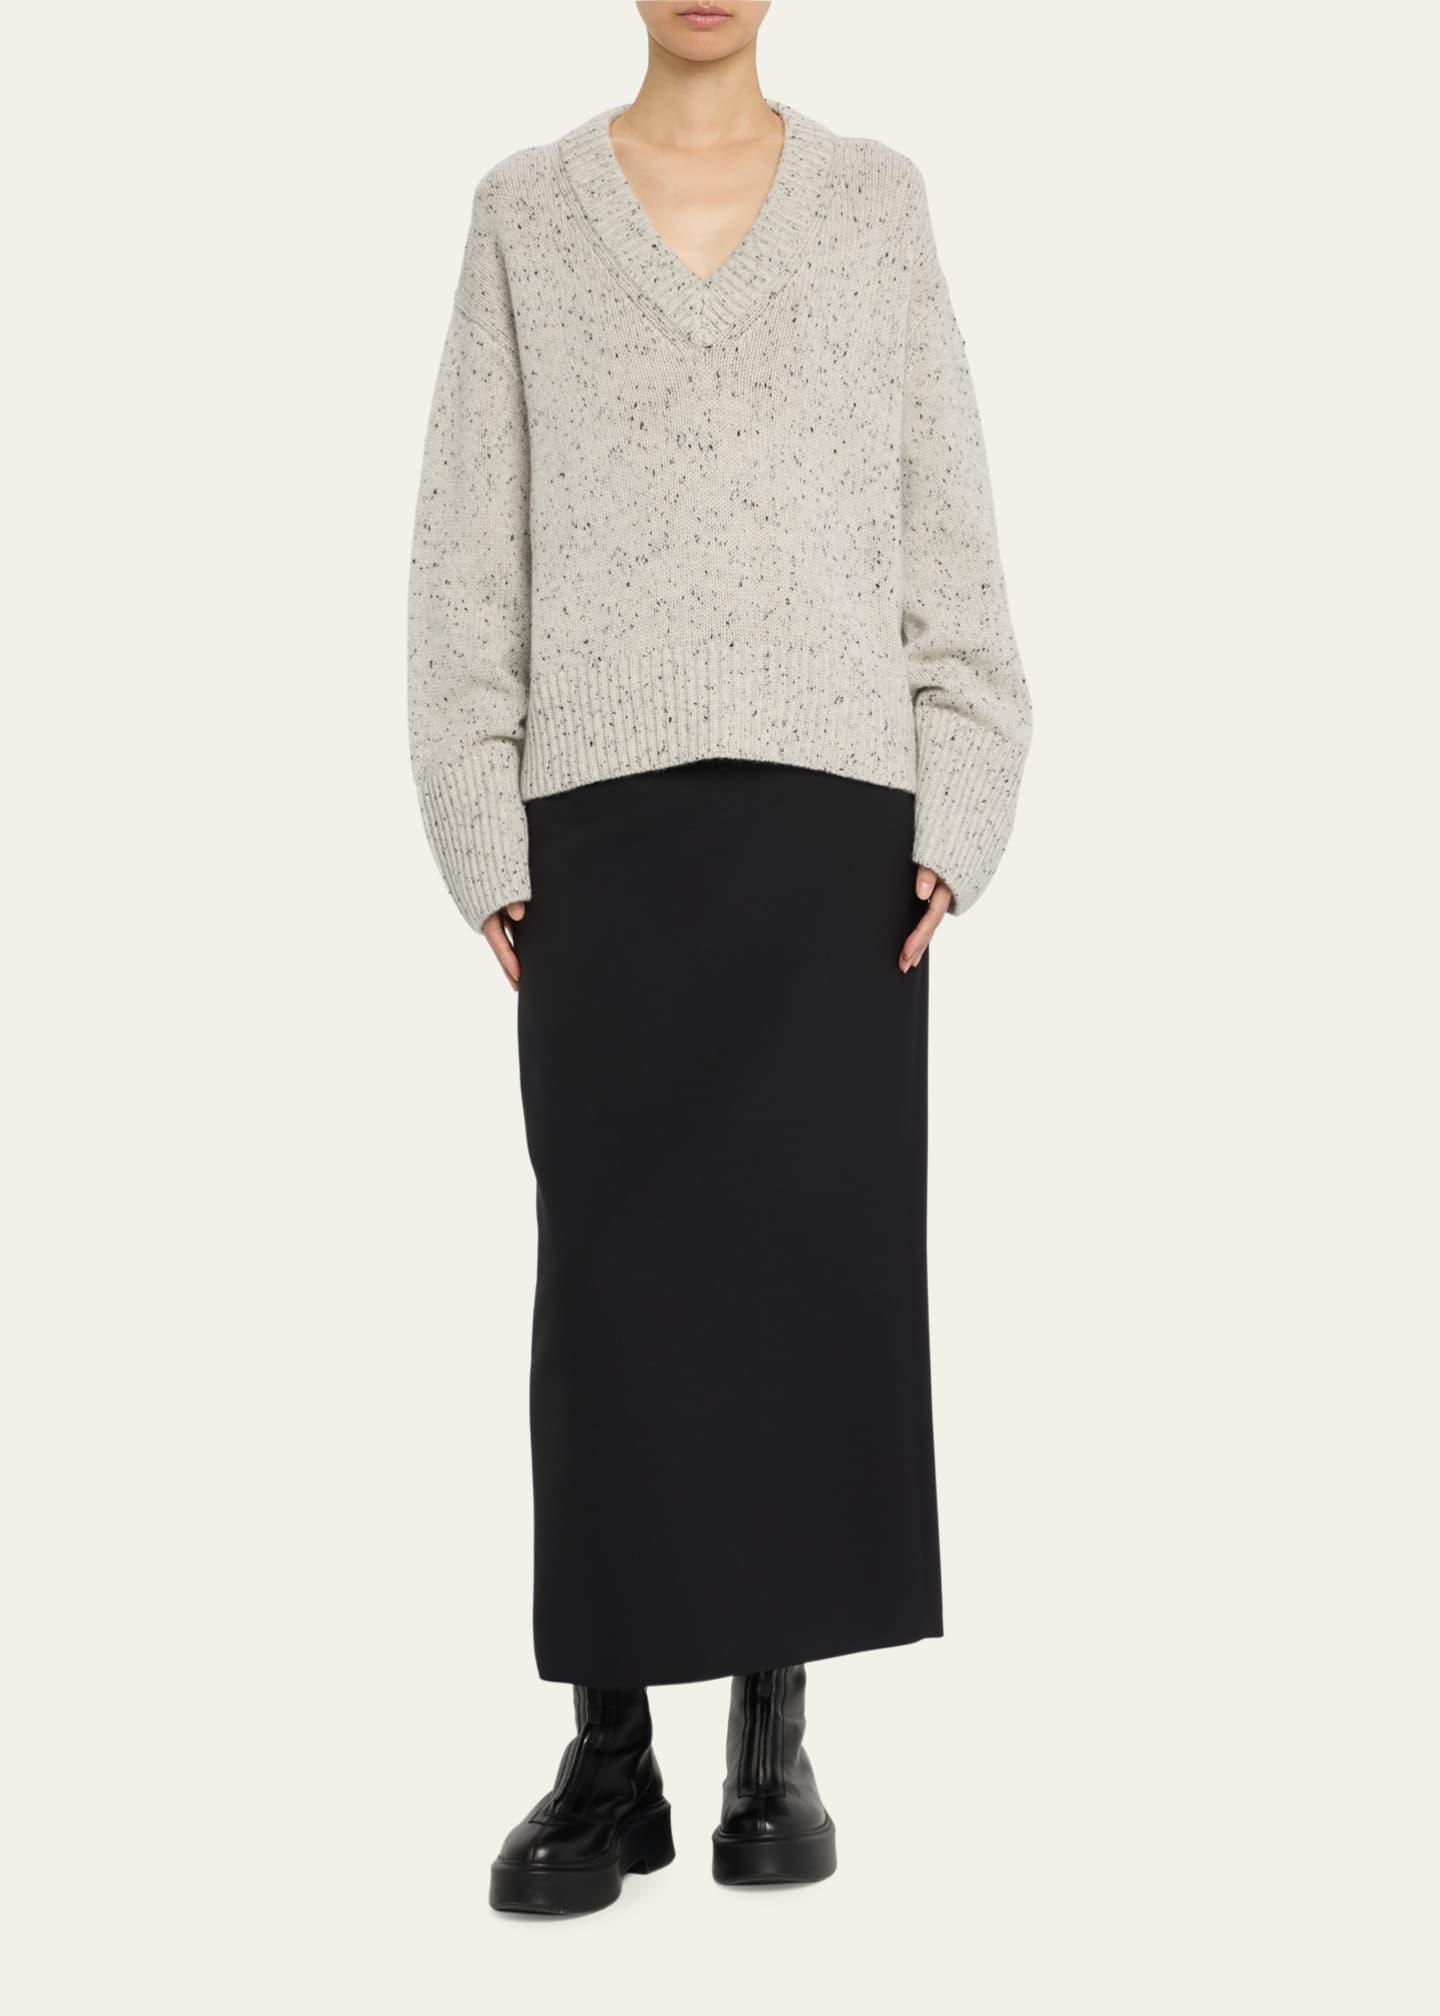 Lisa Yang Aletta Blender Cashmere V-Neck Sweater - Bergdorf Goodman